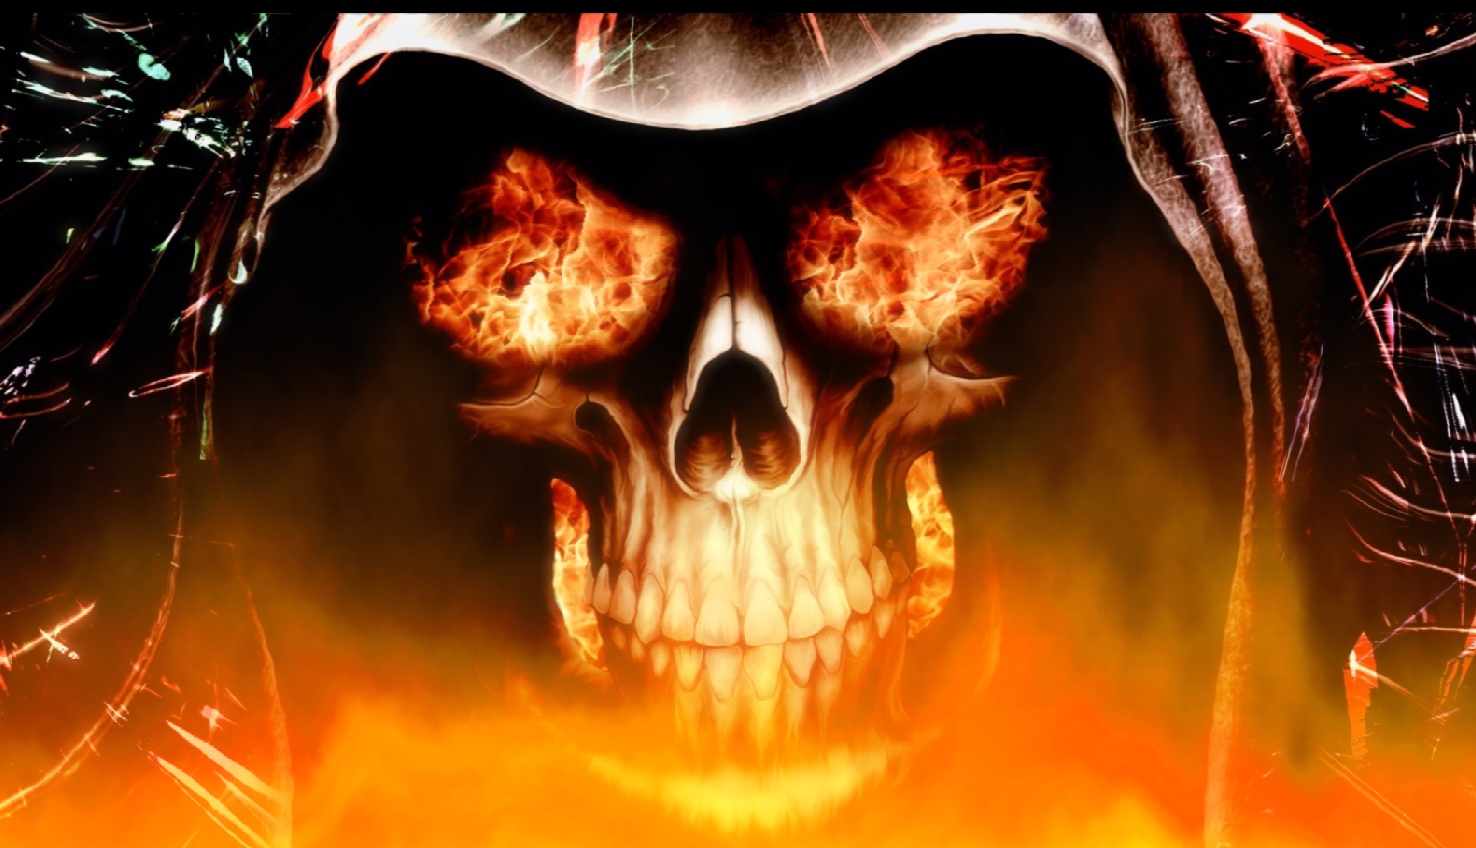 Fire Skull Screensaver Animated Wallpaper H33t Screensavers